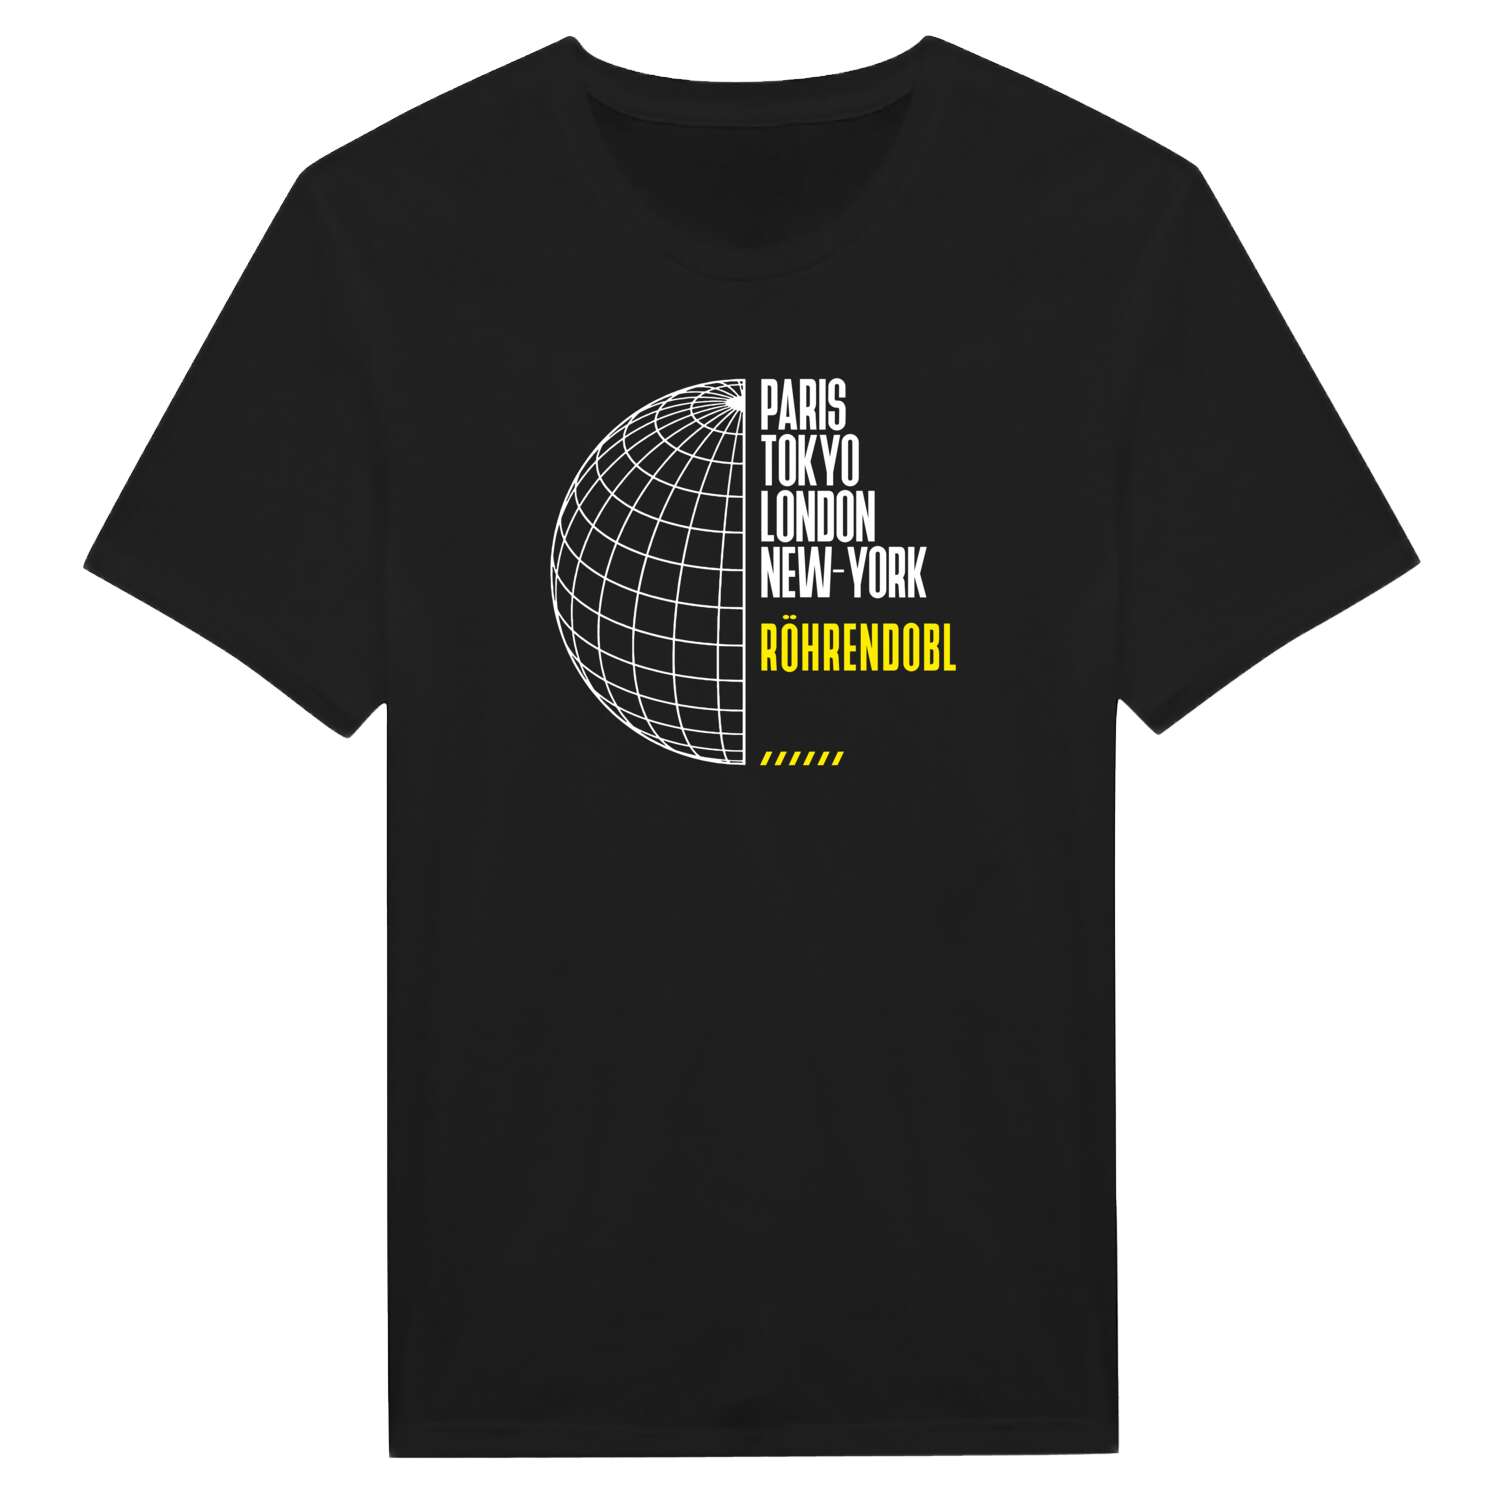 Röhrendobl T-Shirt »Paris Tokyo London«